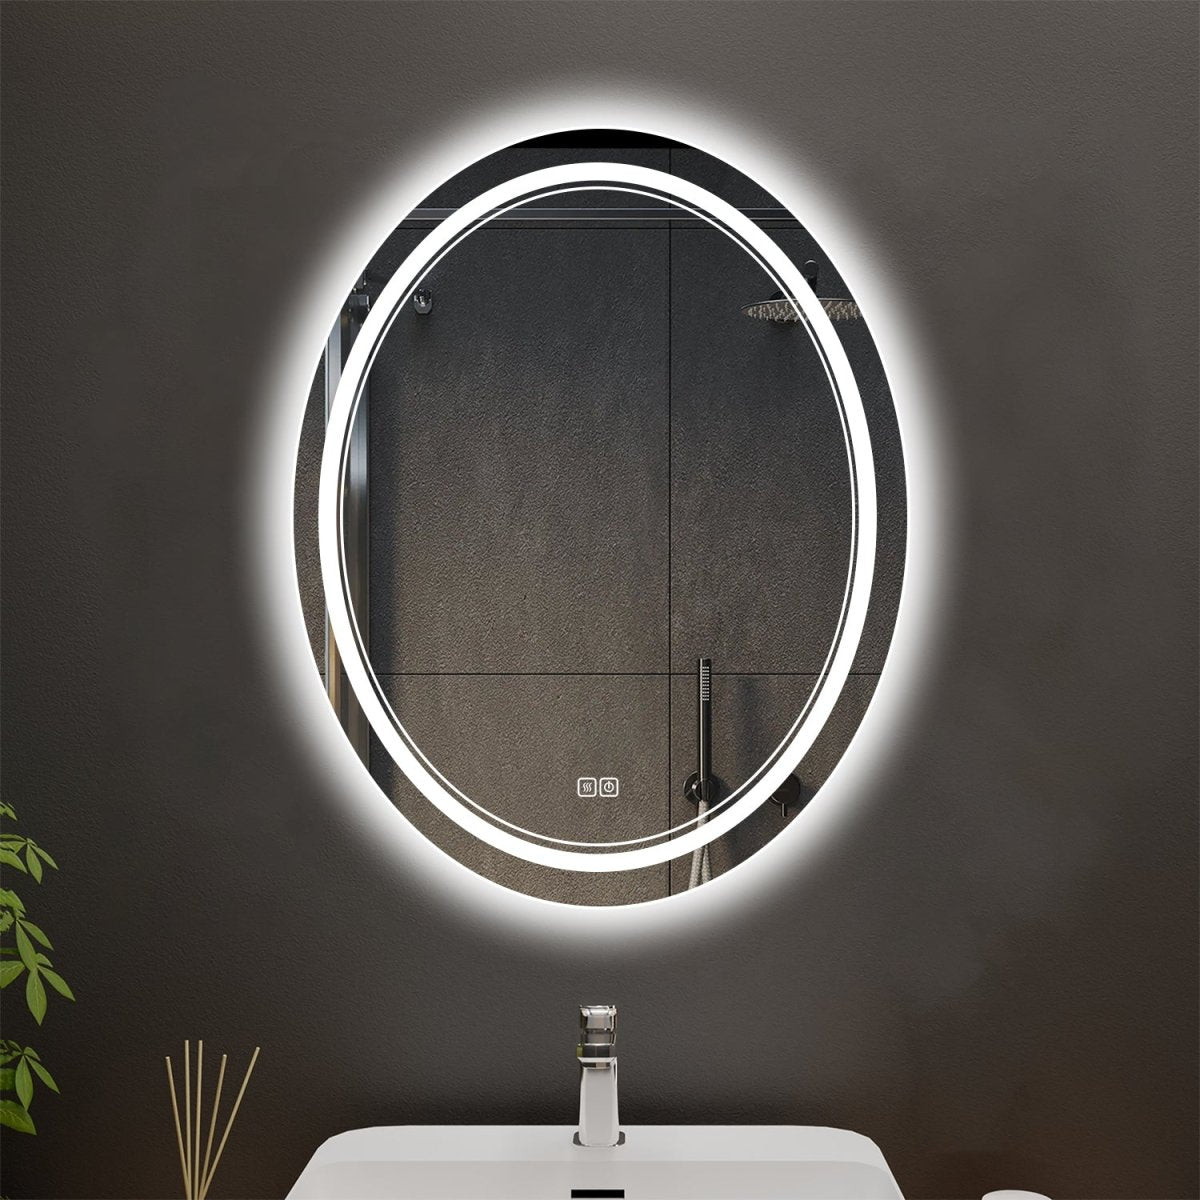 Orbital Customized Oval LED Bathroom Mirror